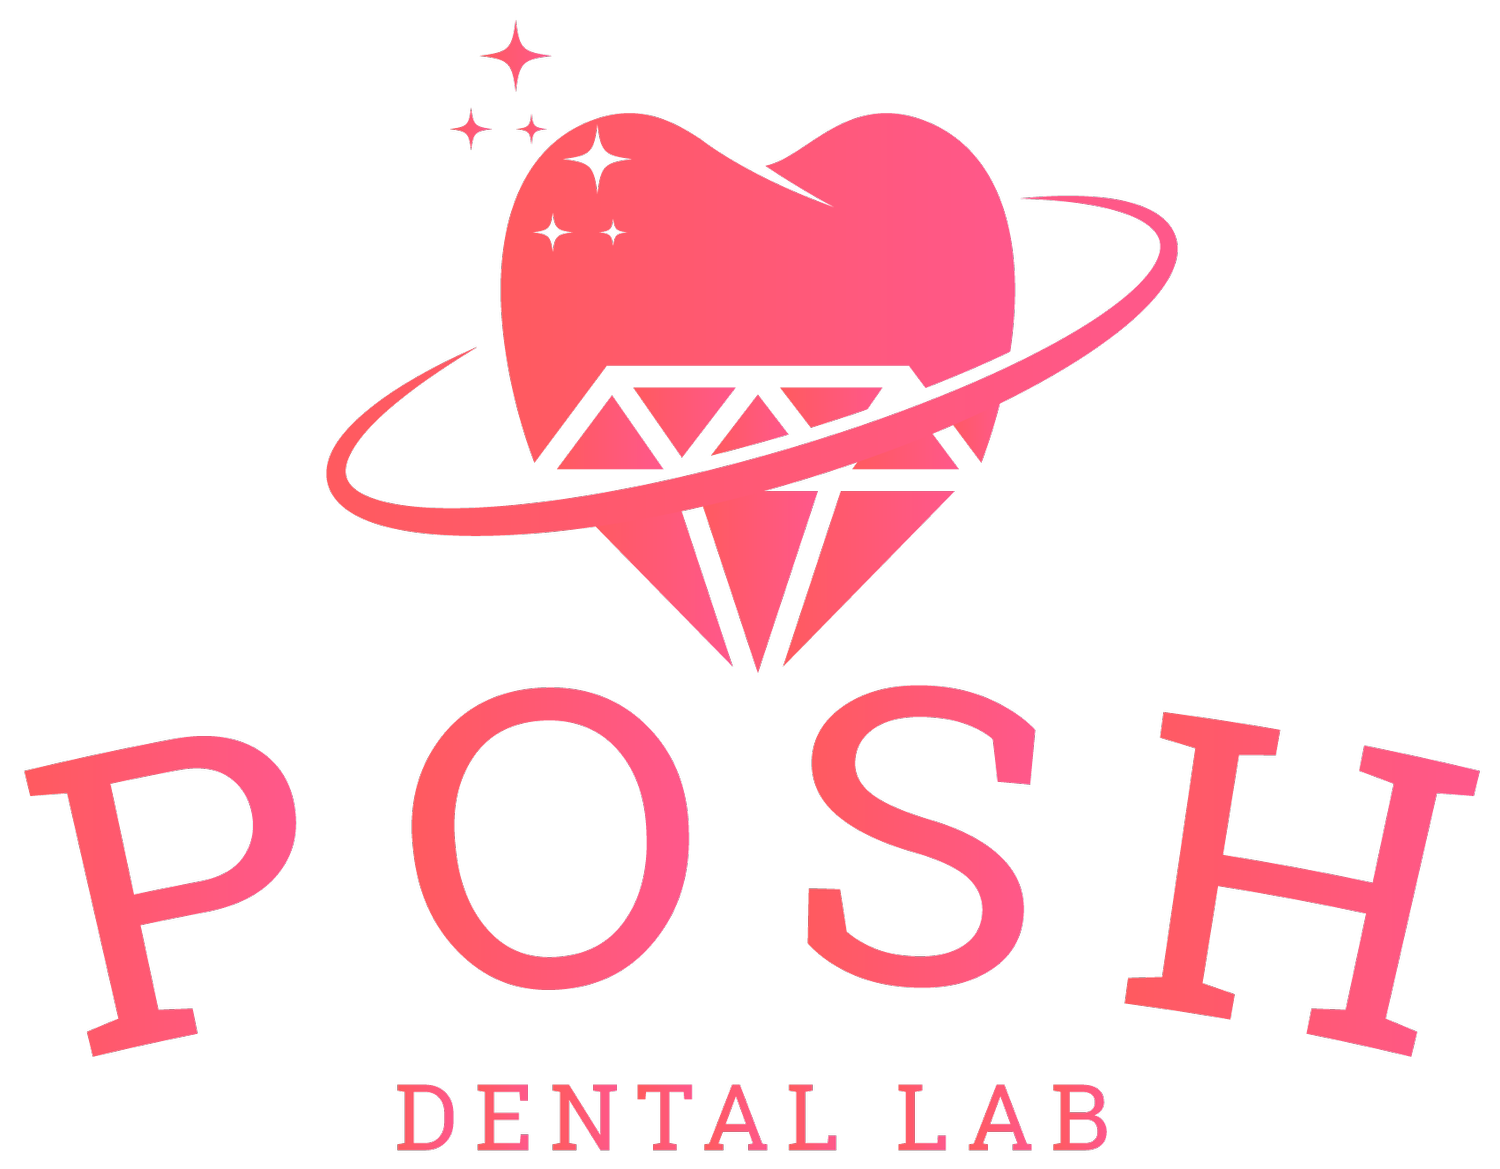 Posh Dental Lab